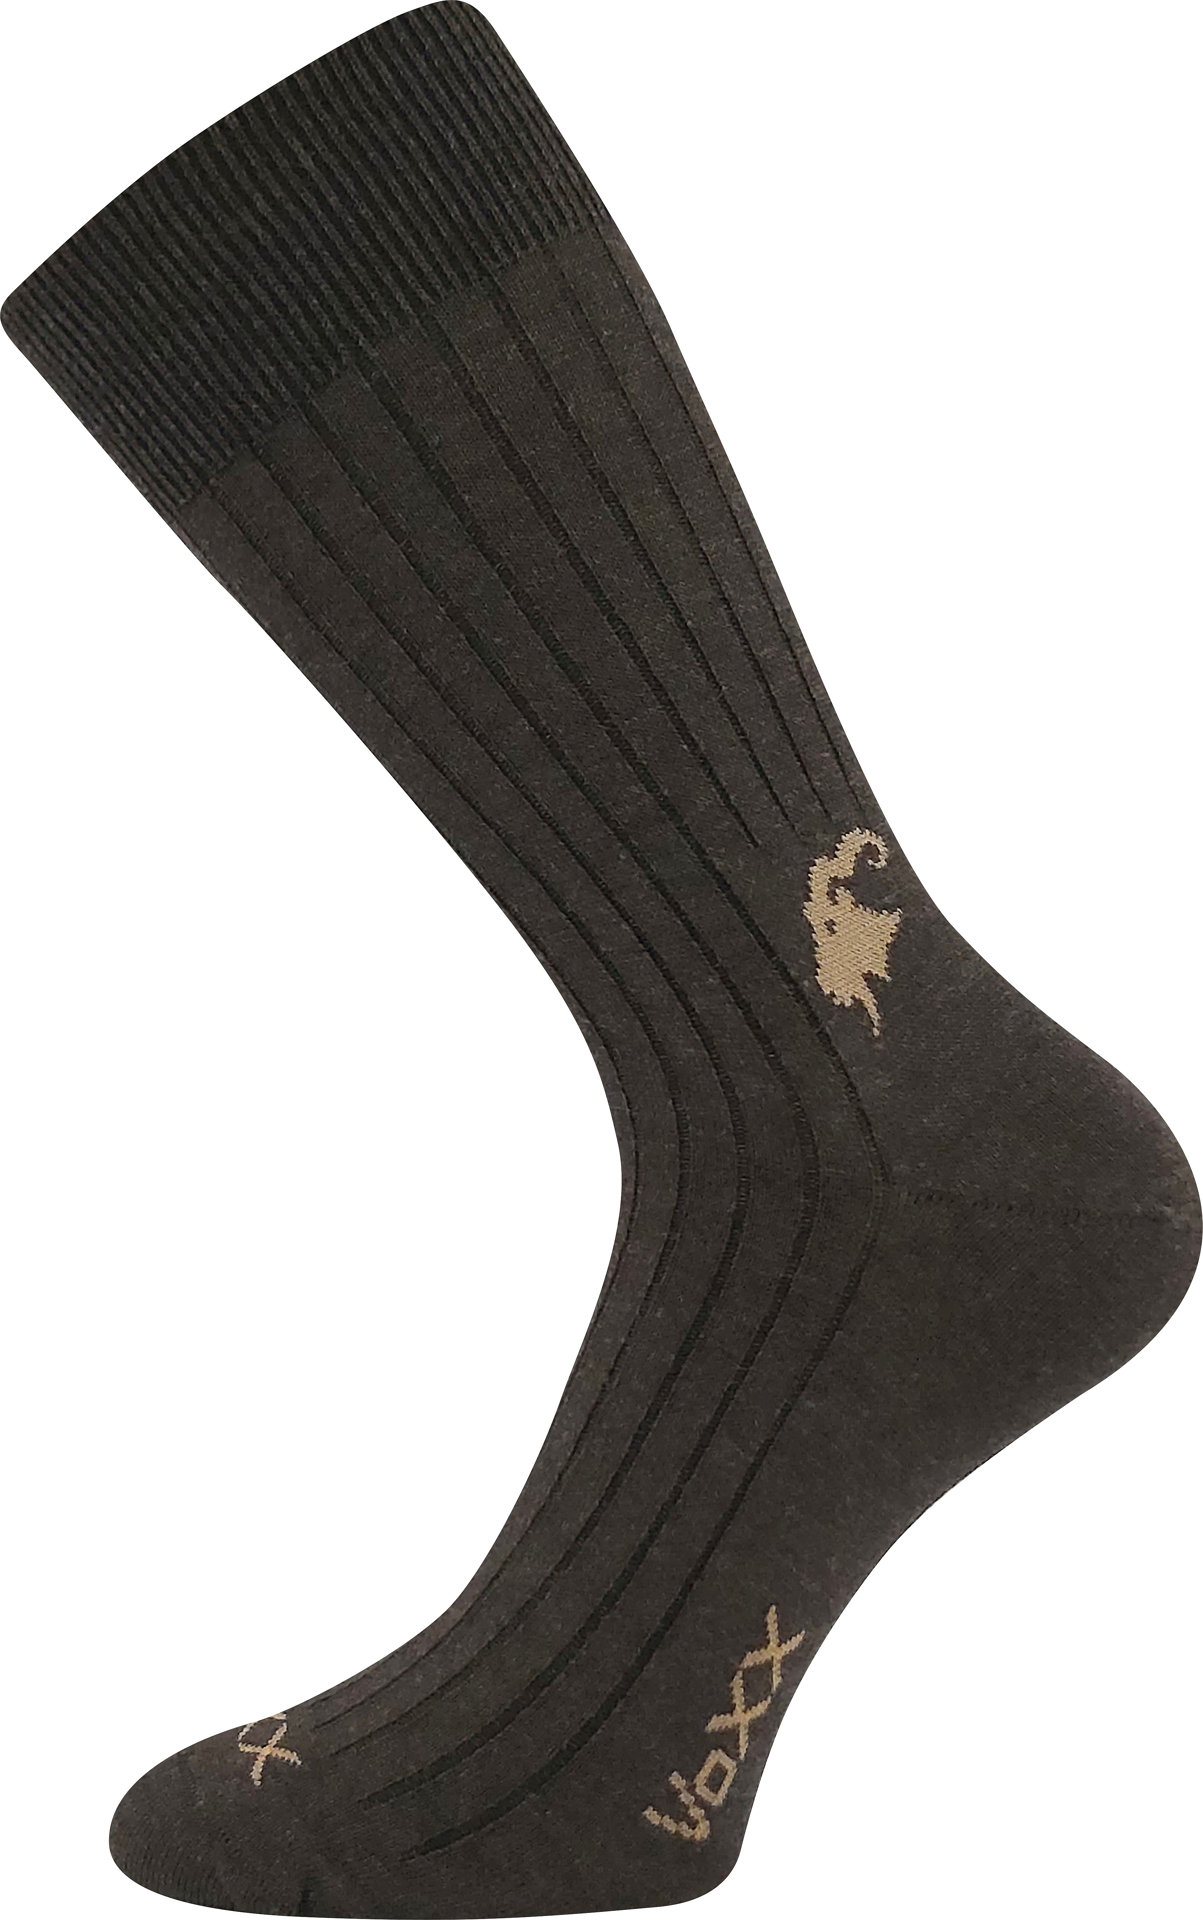 VOXX® ponožky Cashmere love tm.hnědá 3 pár 43-46 120989